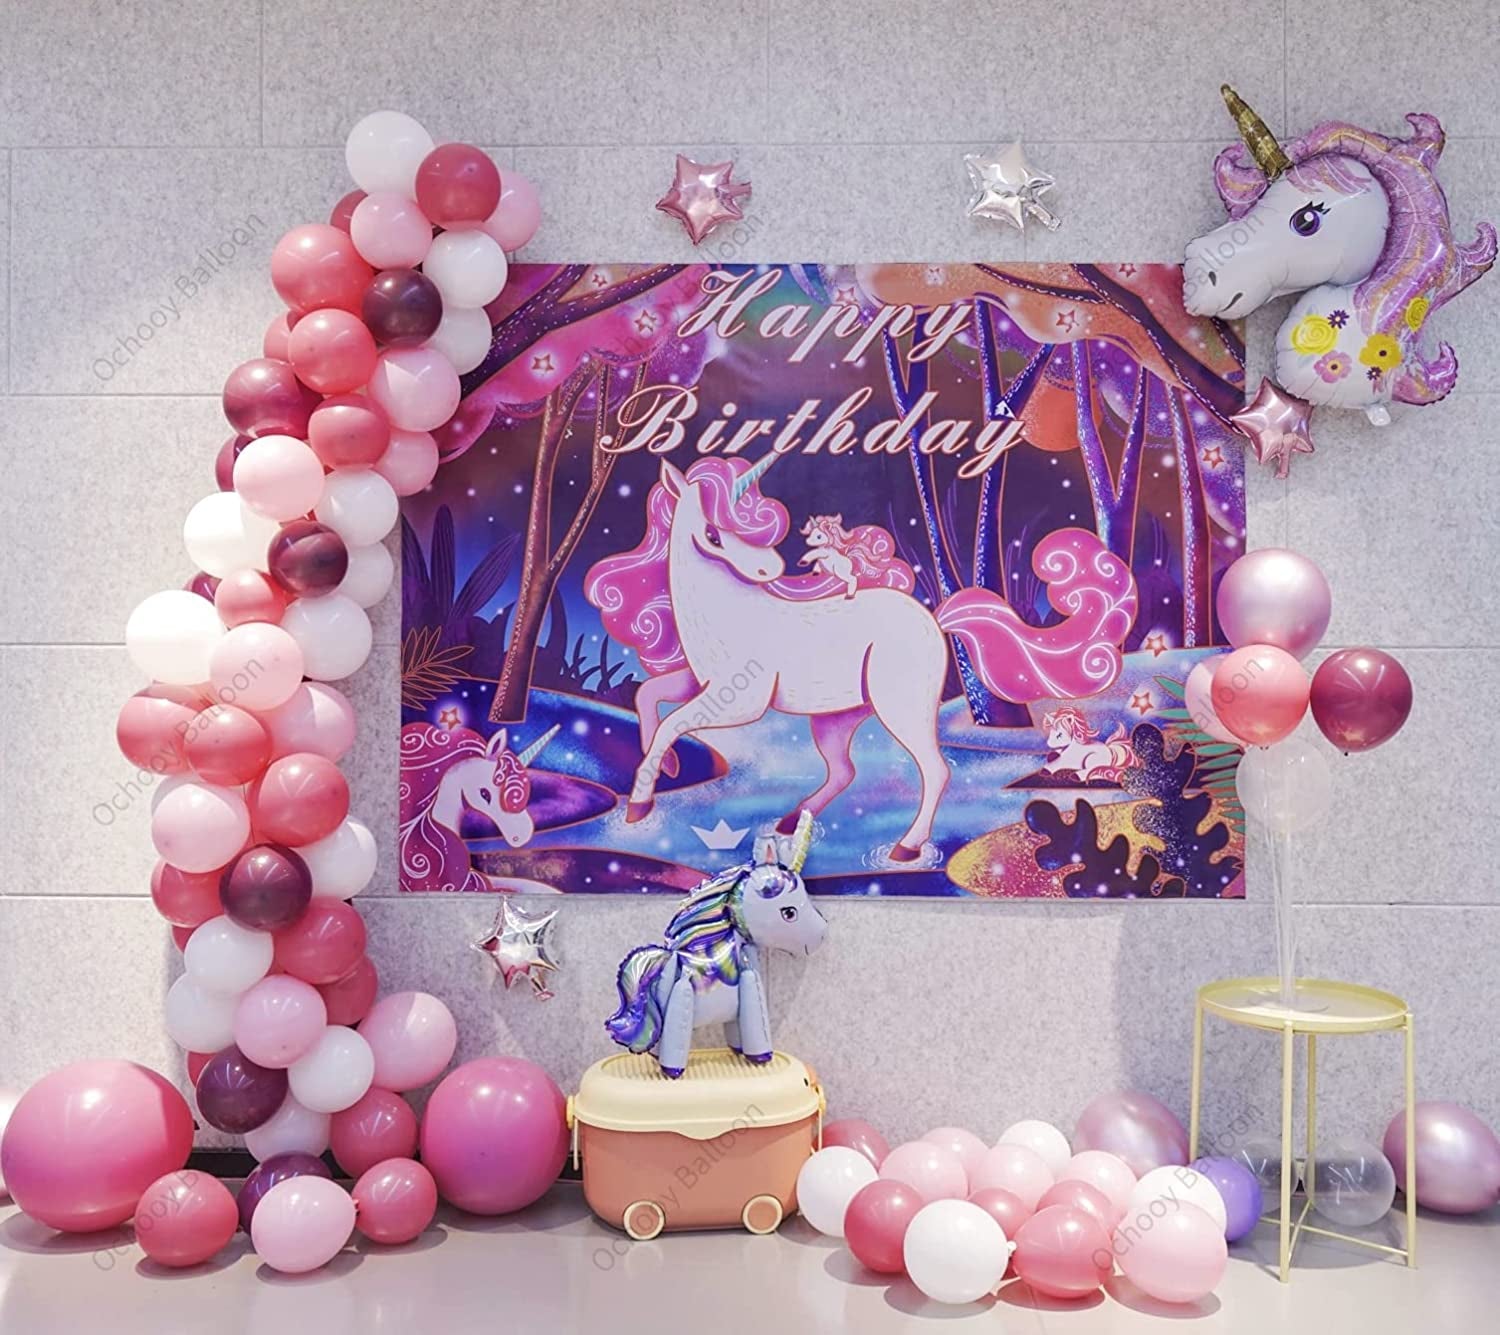 Unicorn Birthday Party Decorations, Unicorn Ballon Arch Kit with